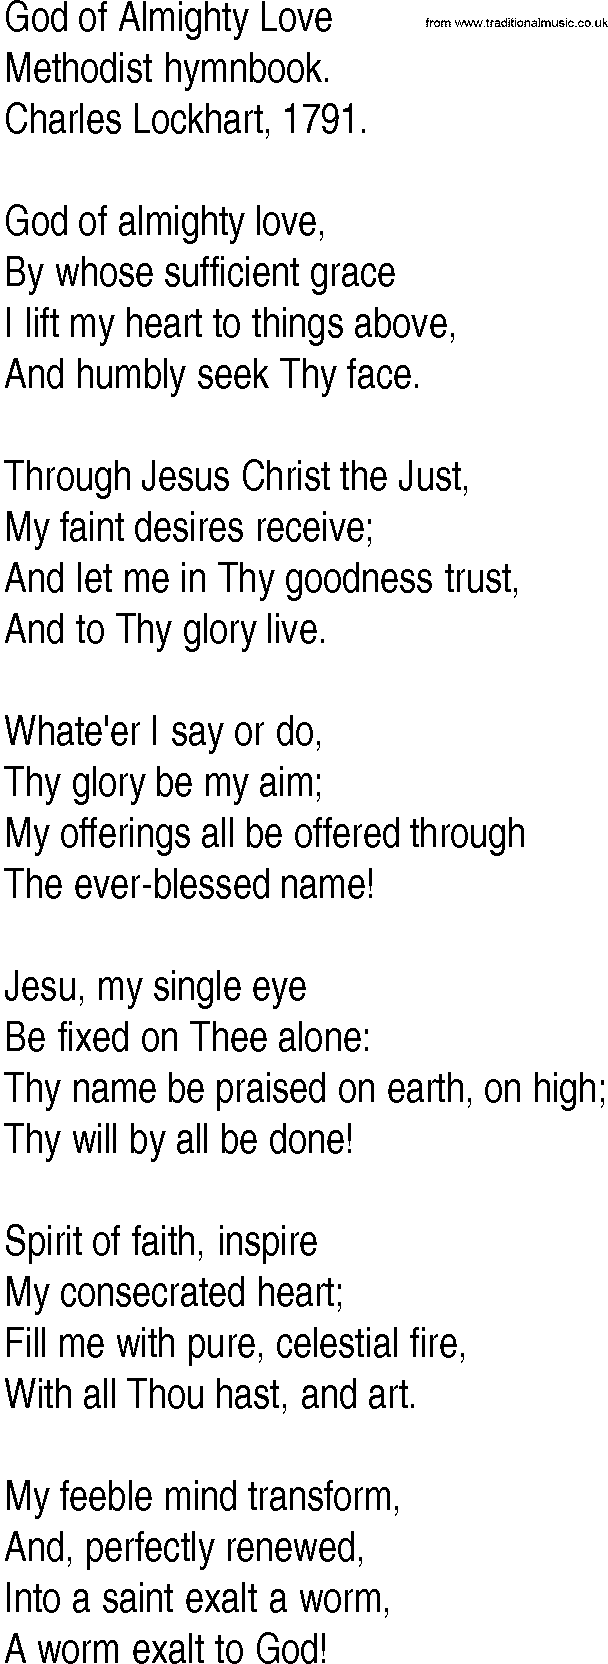 Hymn and Gospel Song: God of Almighty Love by Methodist hymnbook lyrics